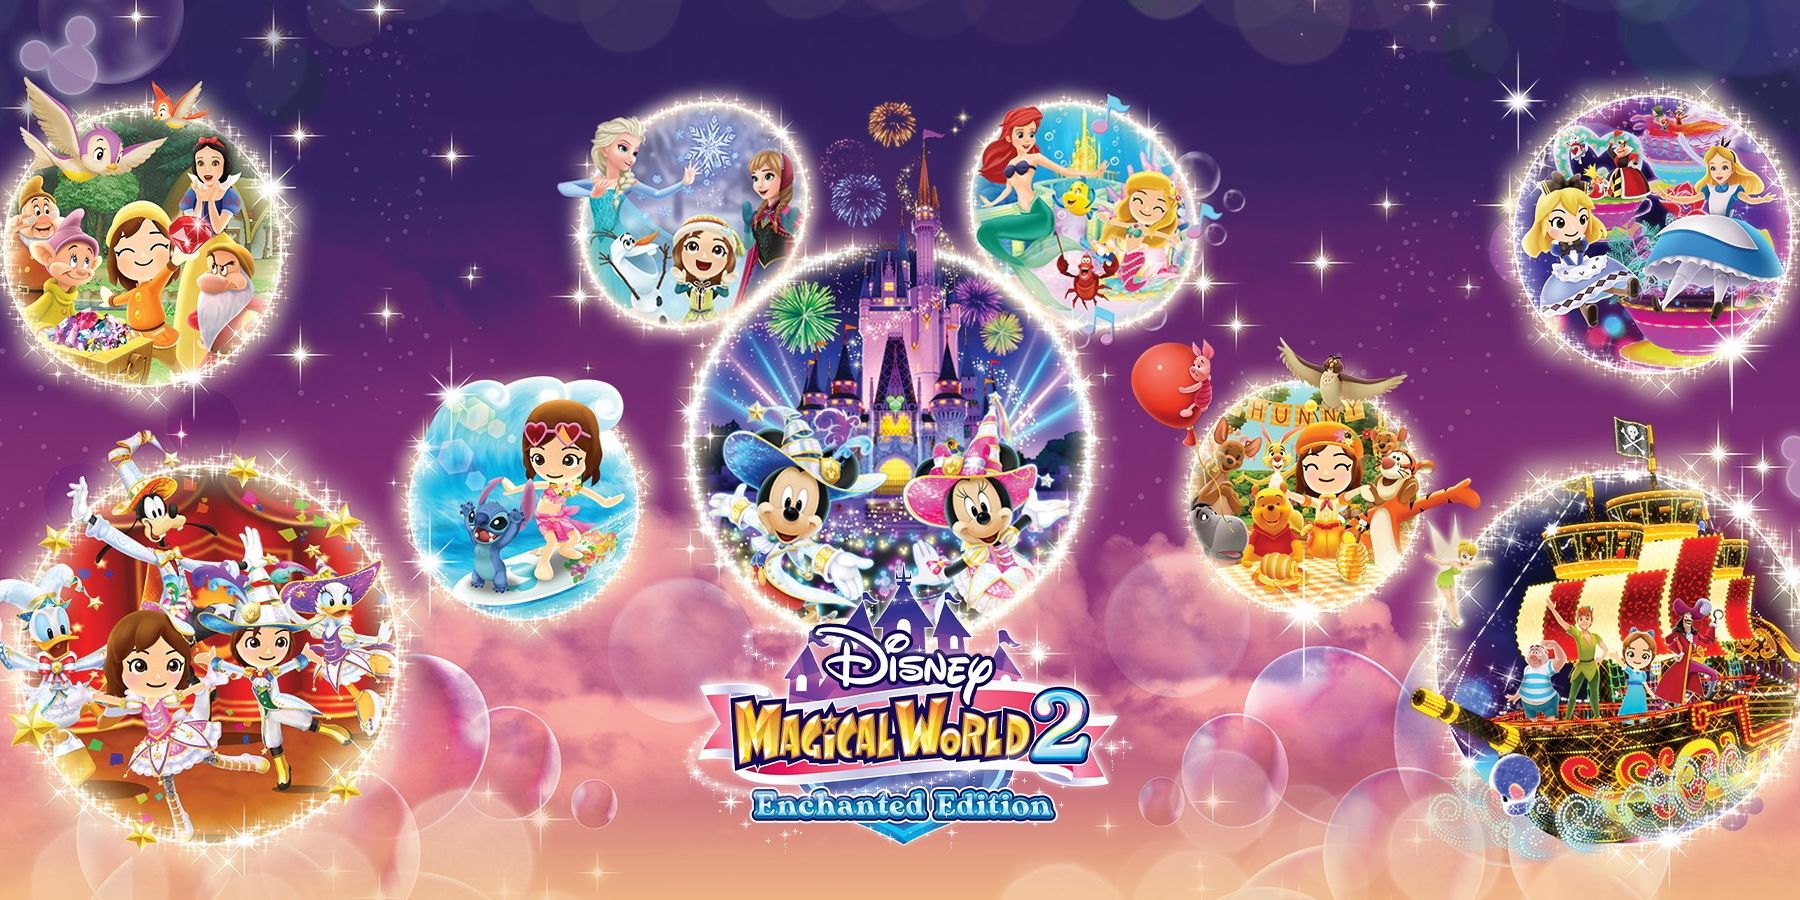 Disney Magical World 2: Enchanted Edition Datang ke Switch tahun ini